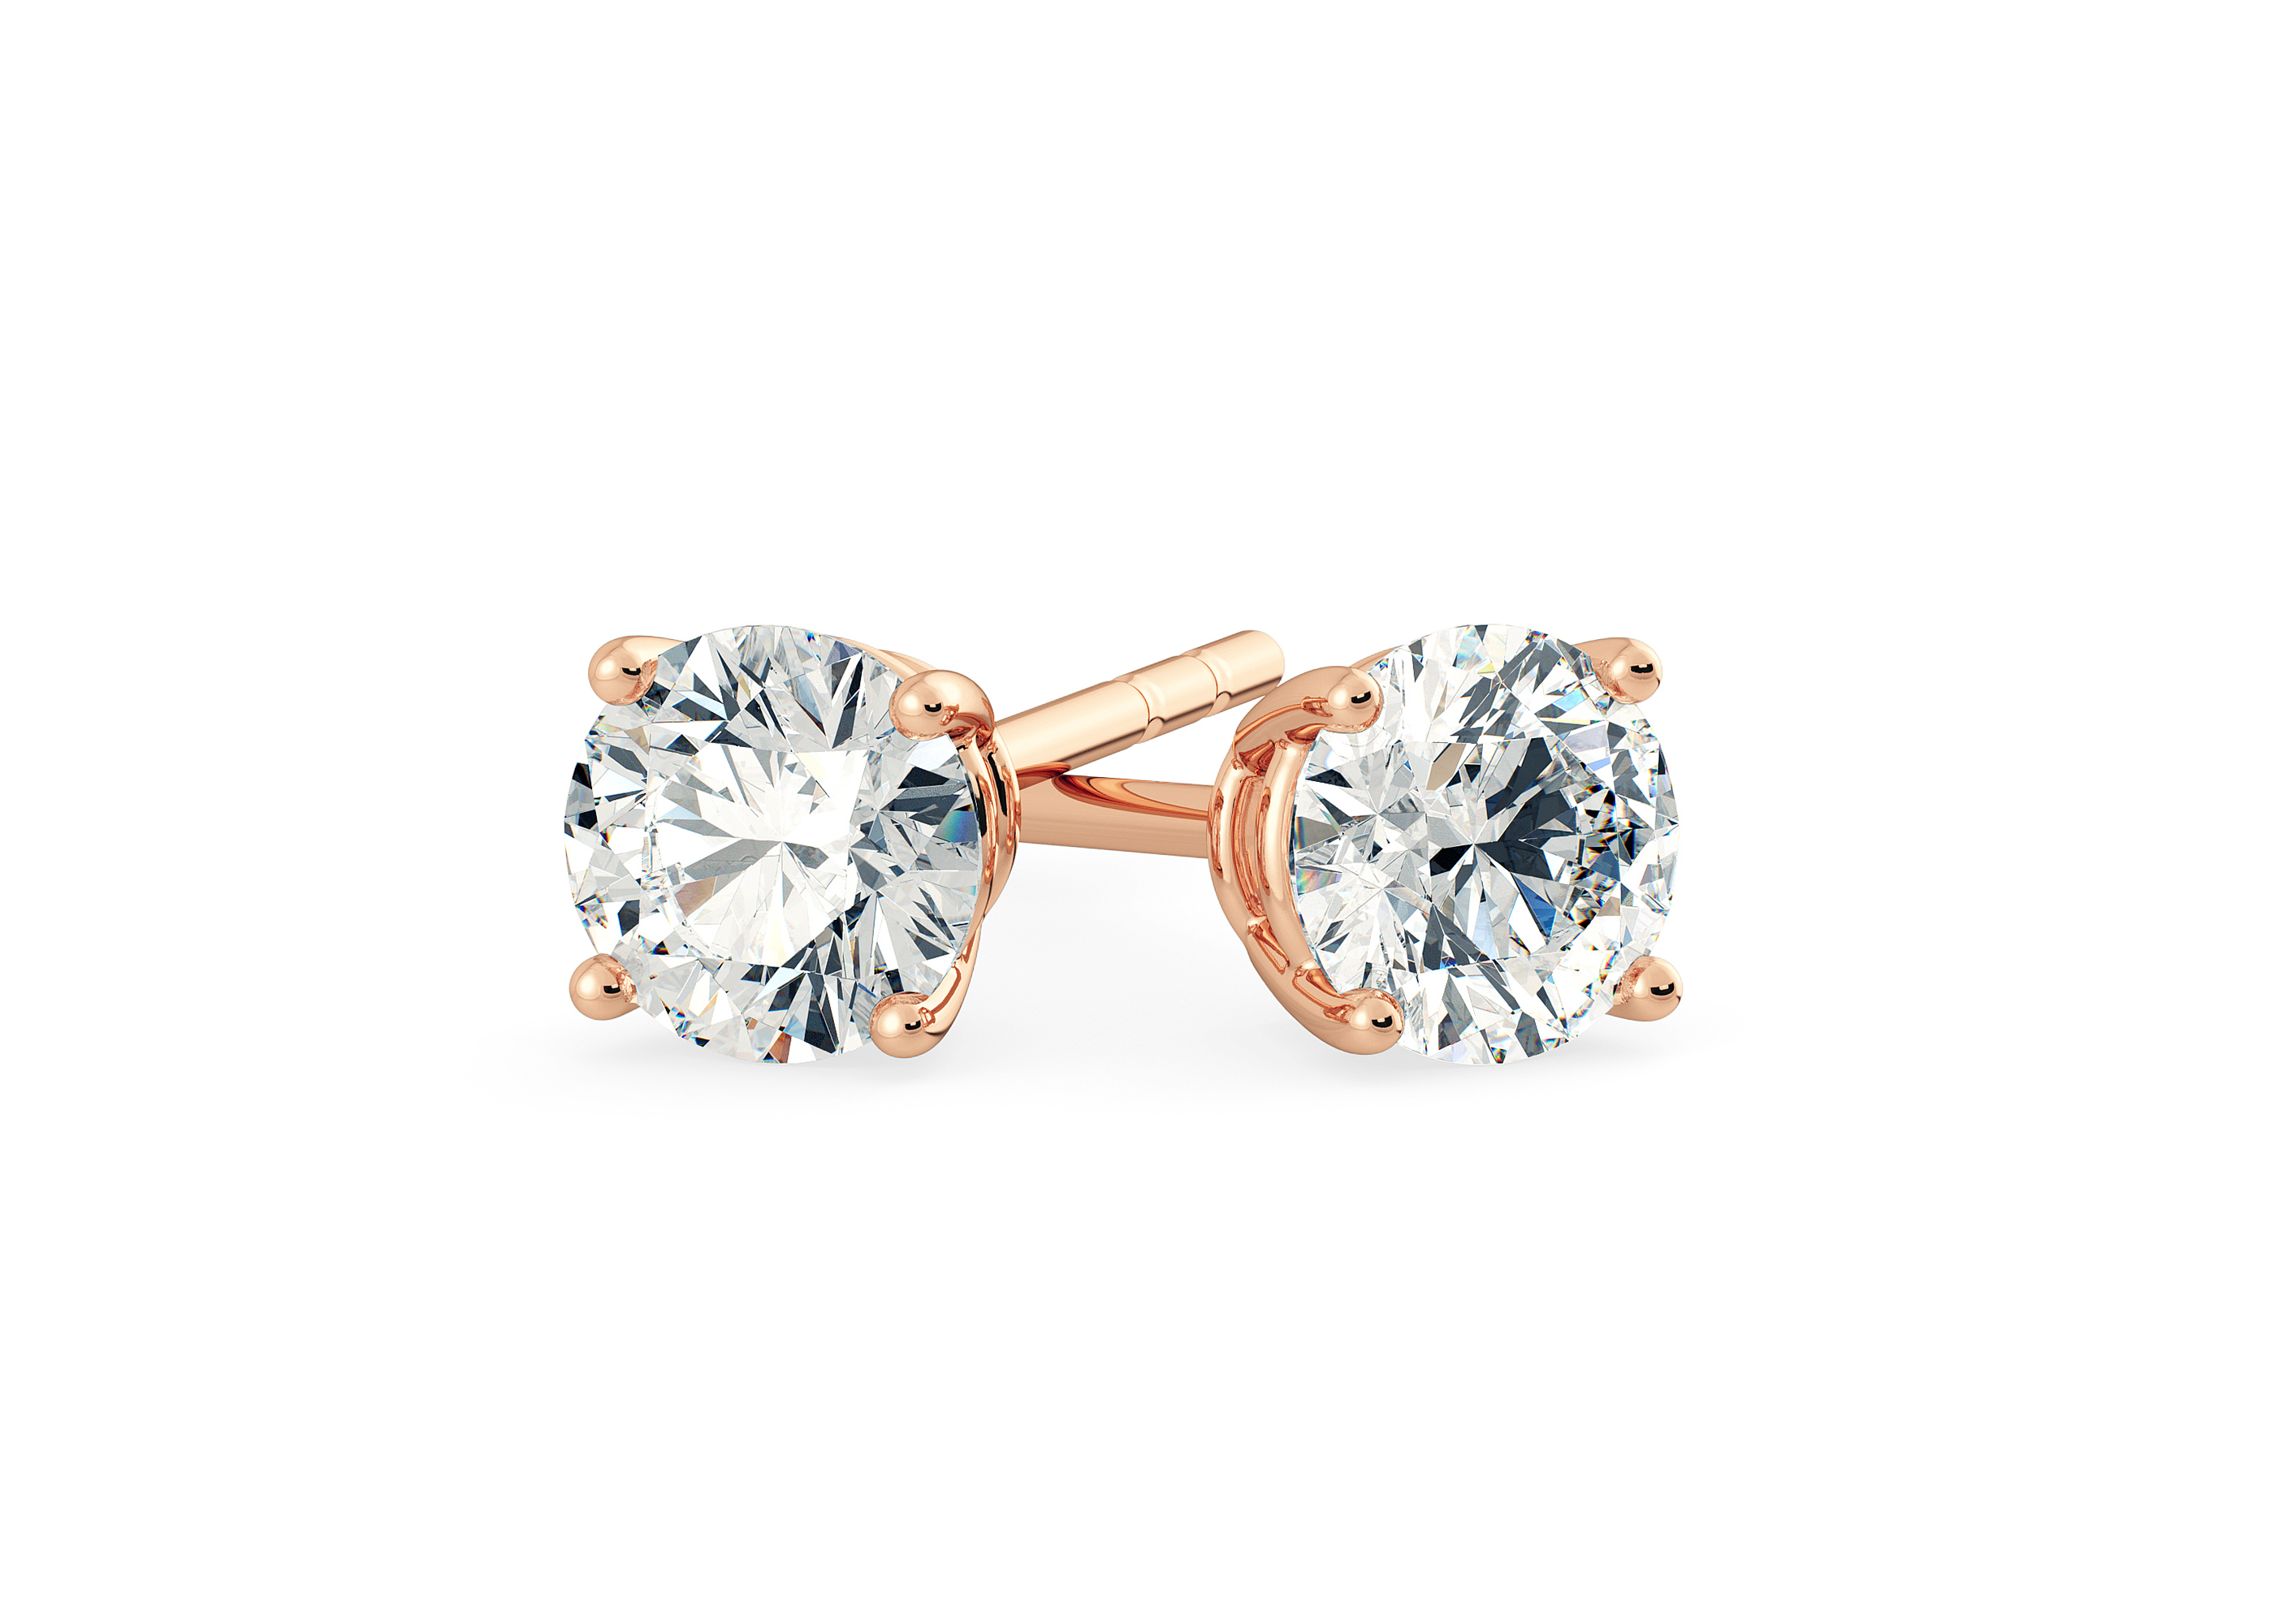 Half Carat Round Brilliant Diamond Stud Earrings in 18K Rose Gold